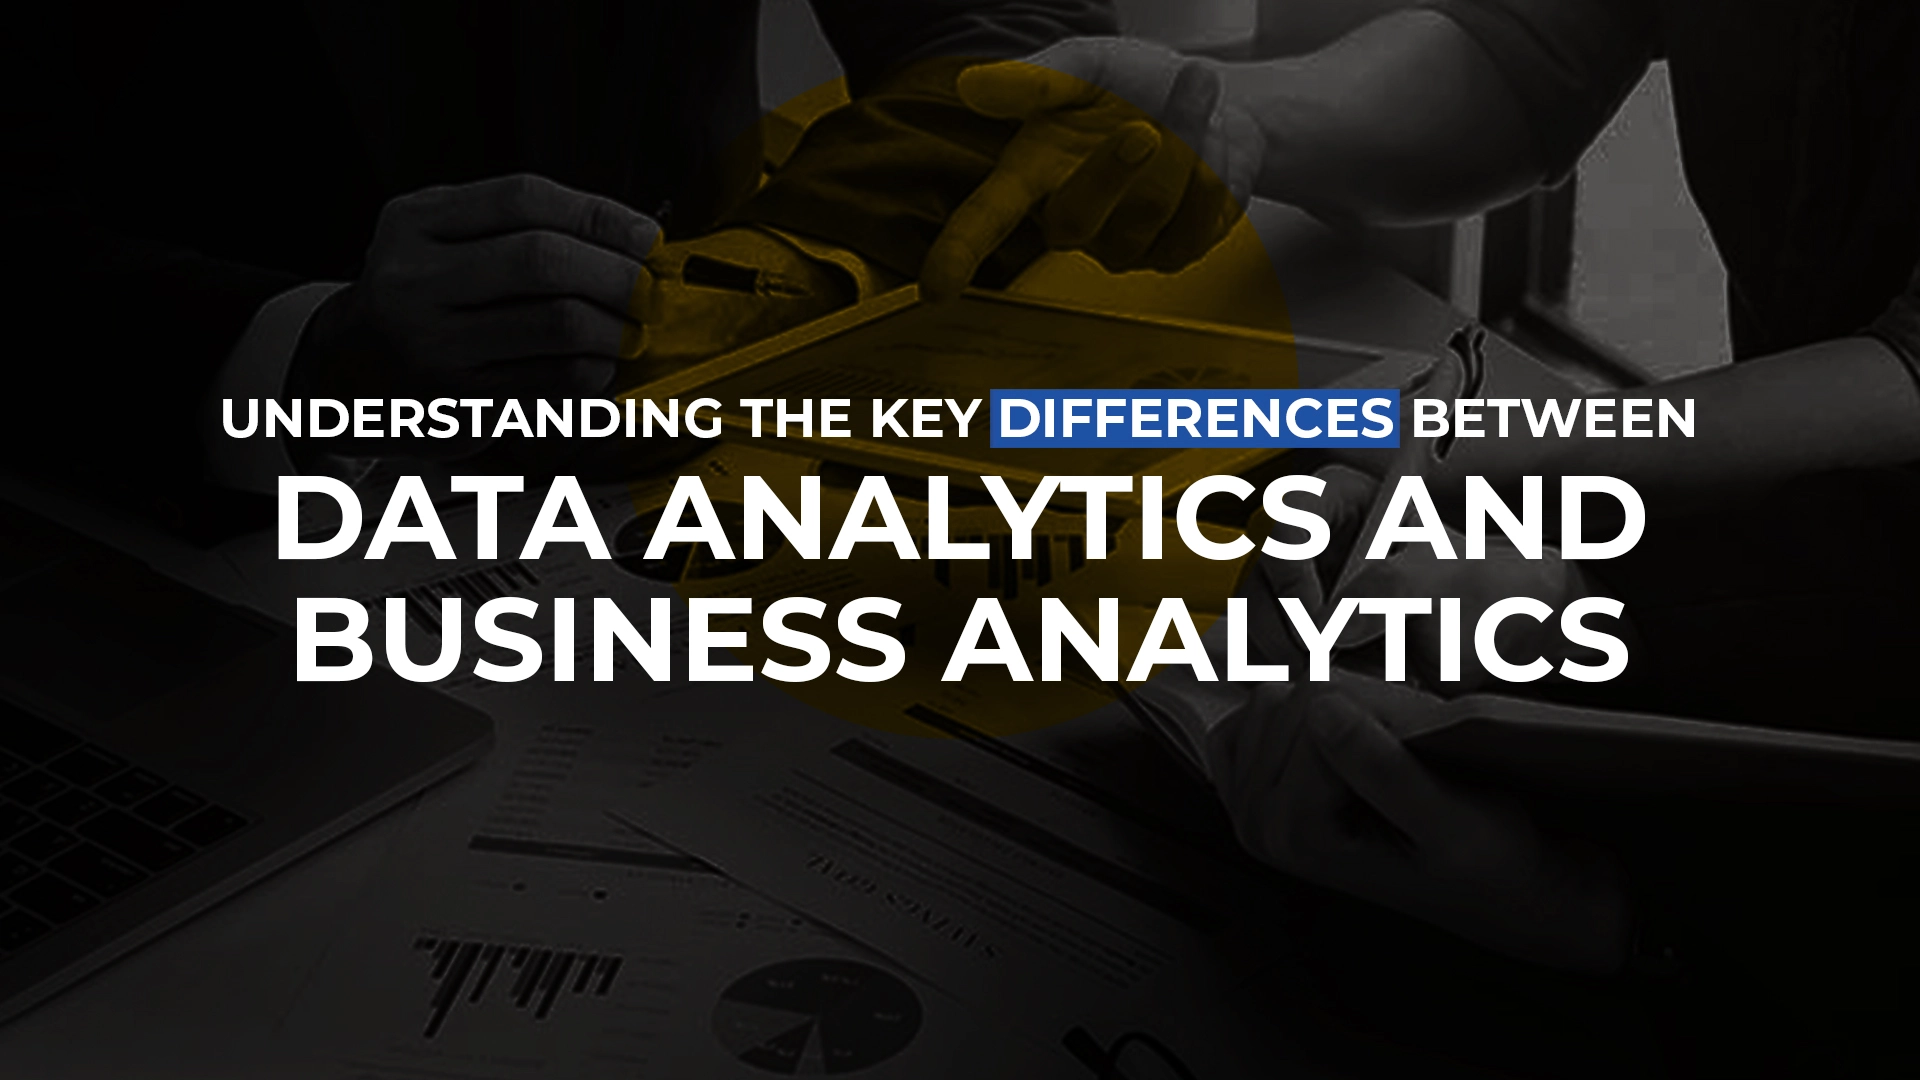 Data Analytics vs Business Analytics: What's the Difference?